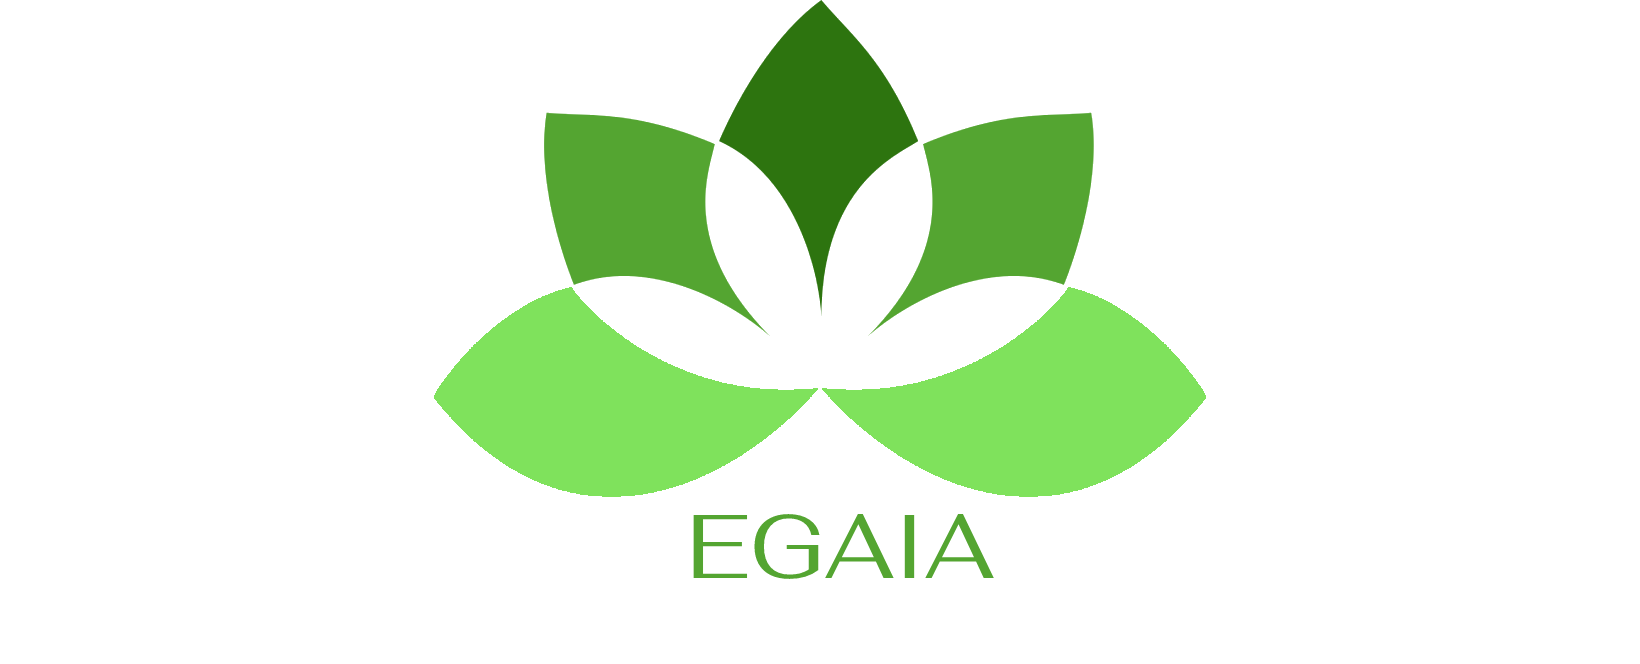 EGAIA logo